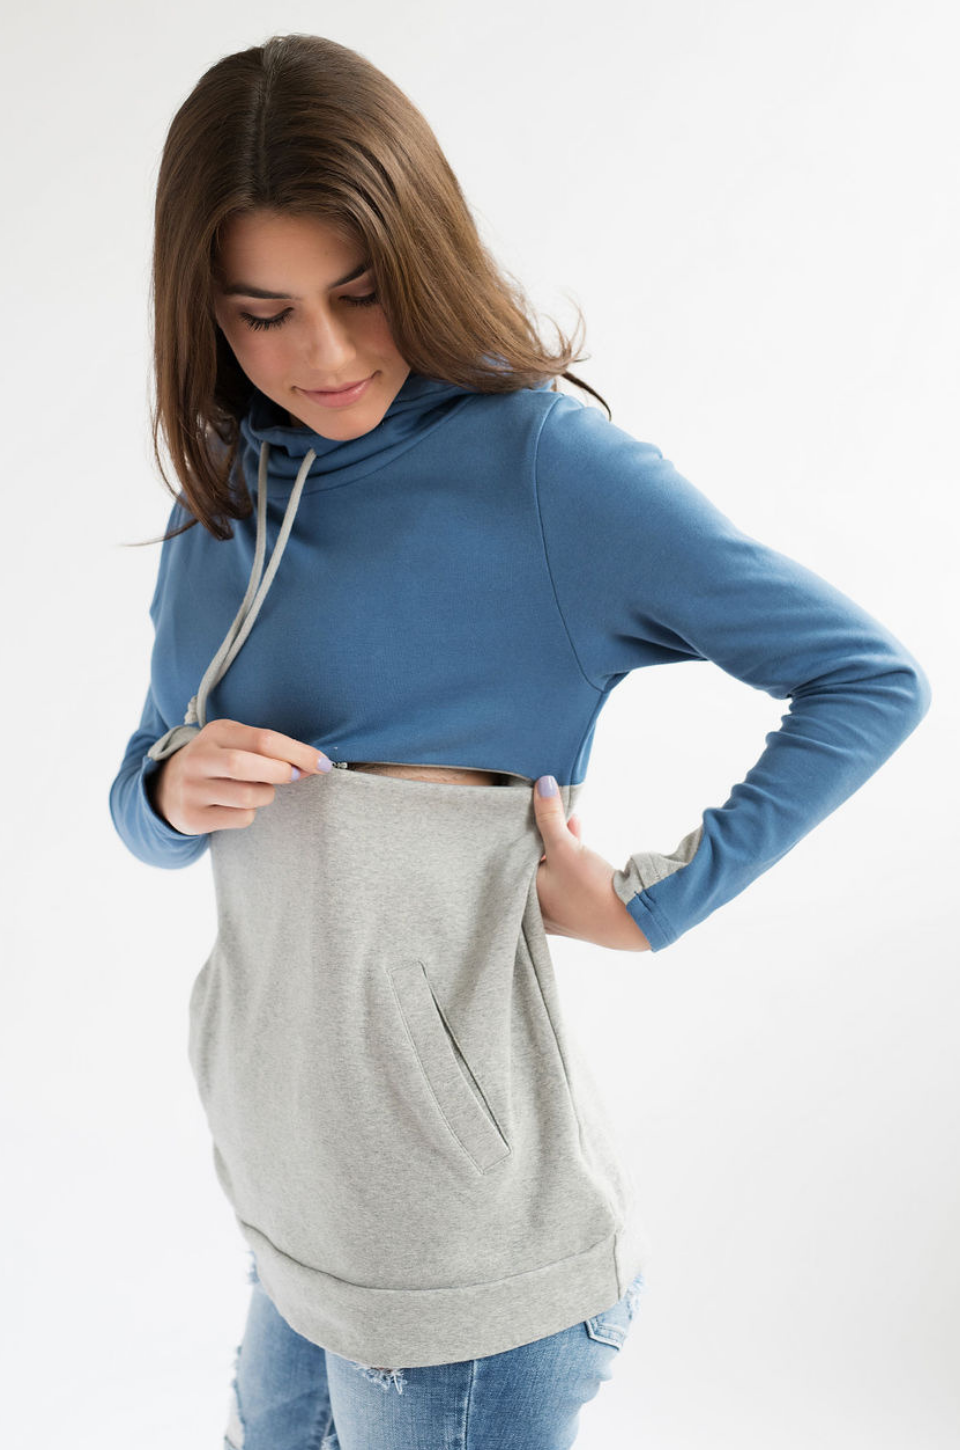 Nursing Sweatshirt Pullover - Colorblock Blue/Gray